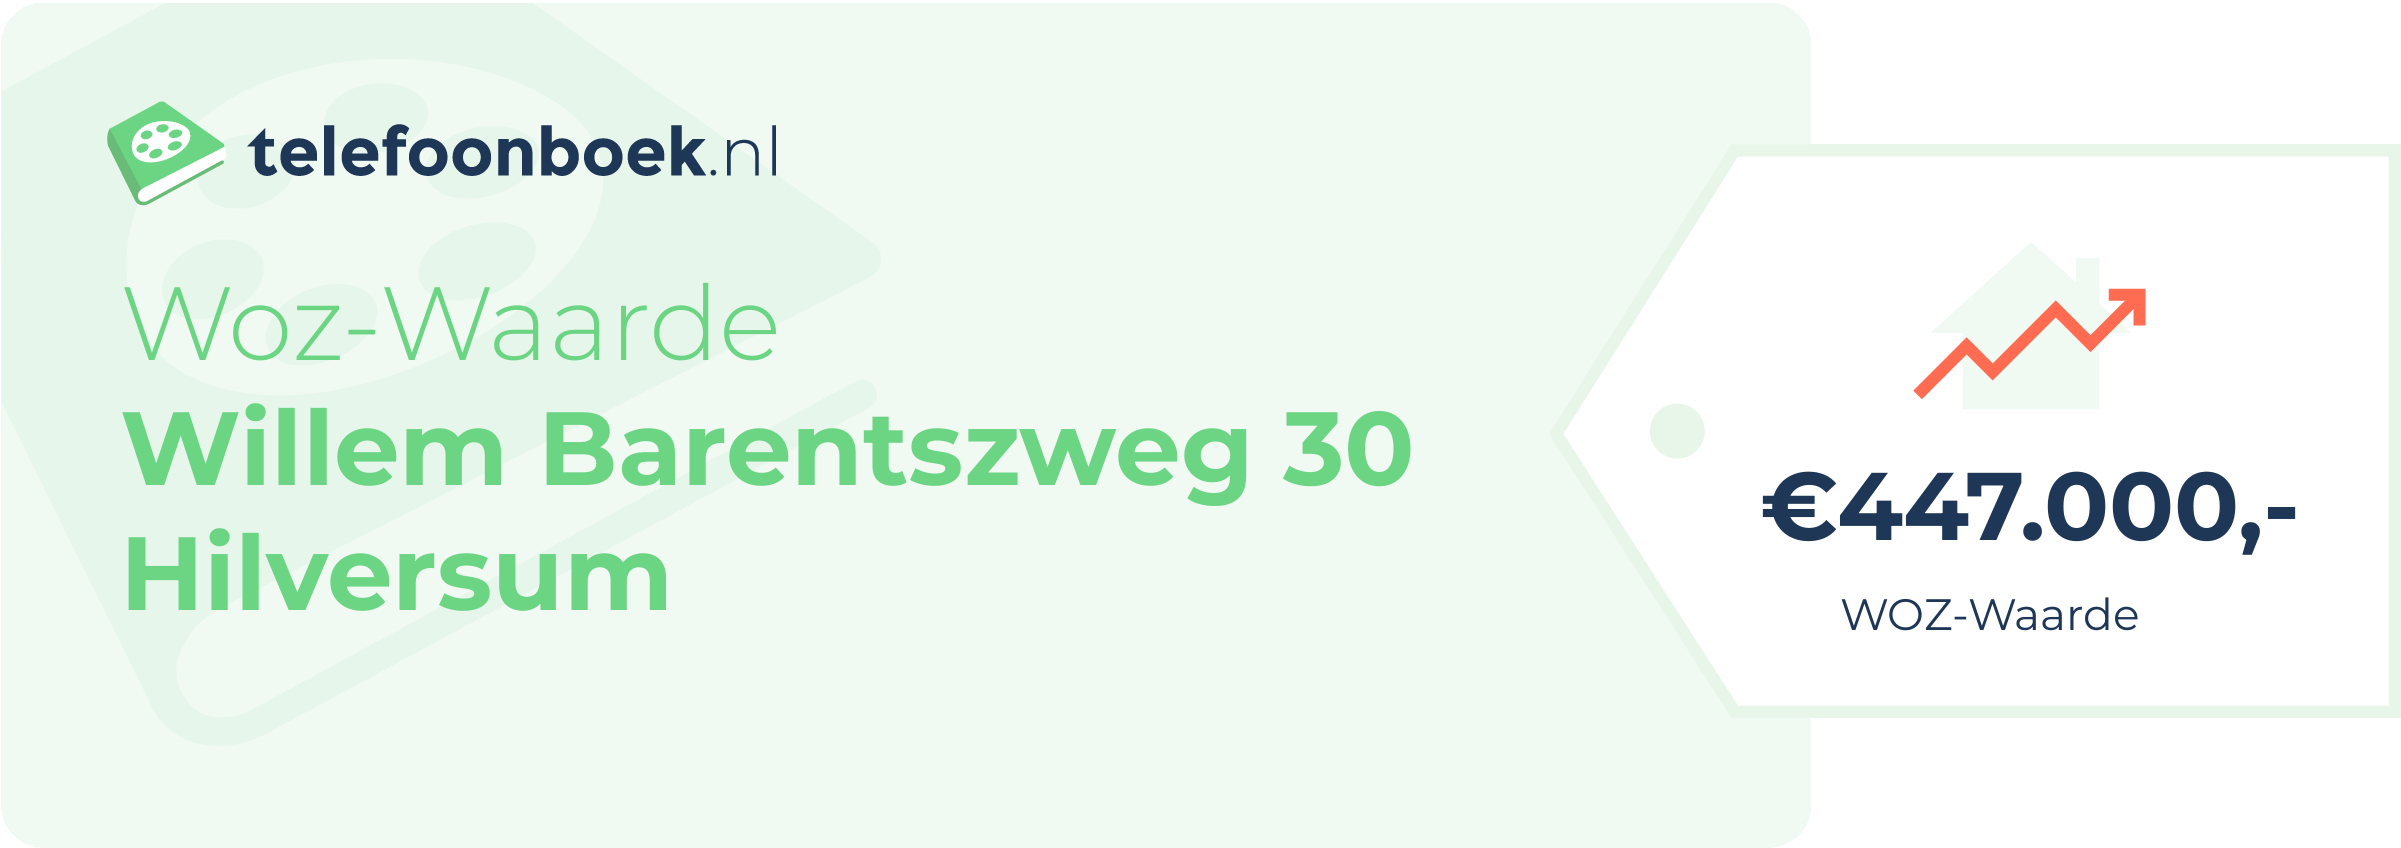 WOZ-waarde Willem Barentszweg 30 Hilversum